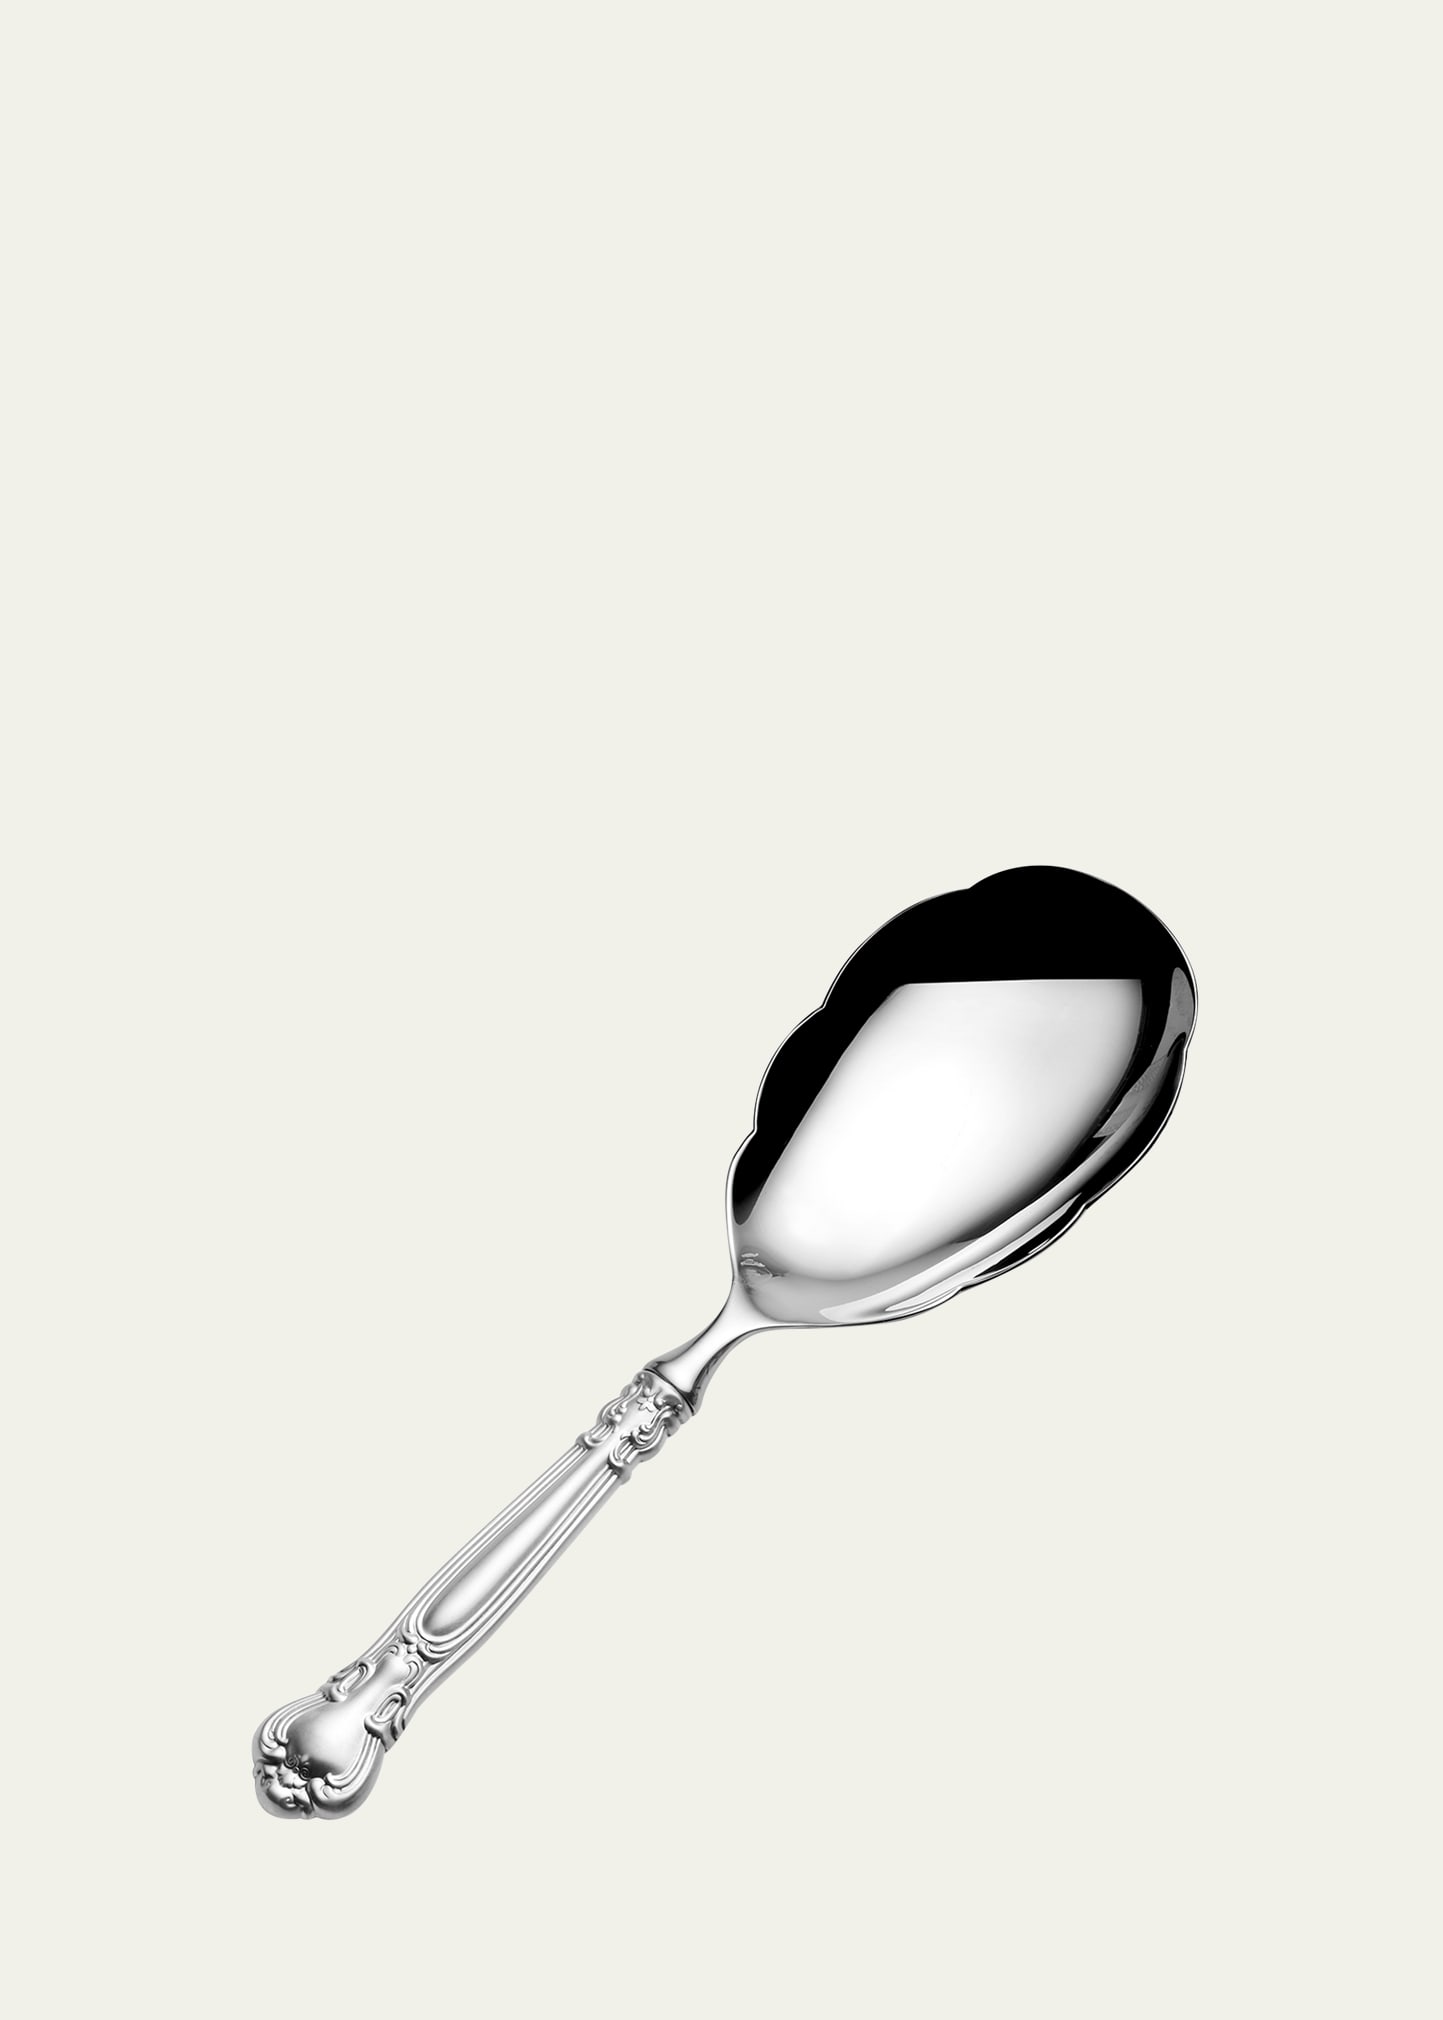 Fairfax Rice Serving Spoon